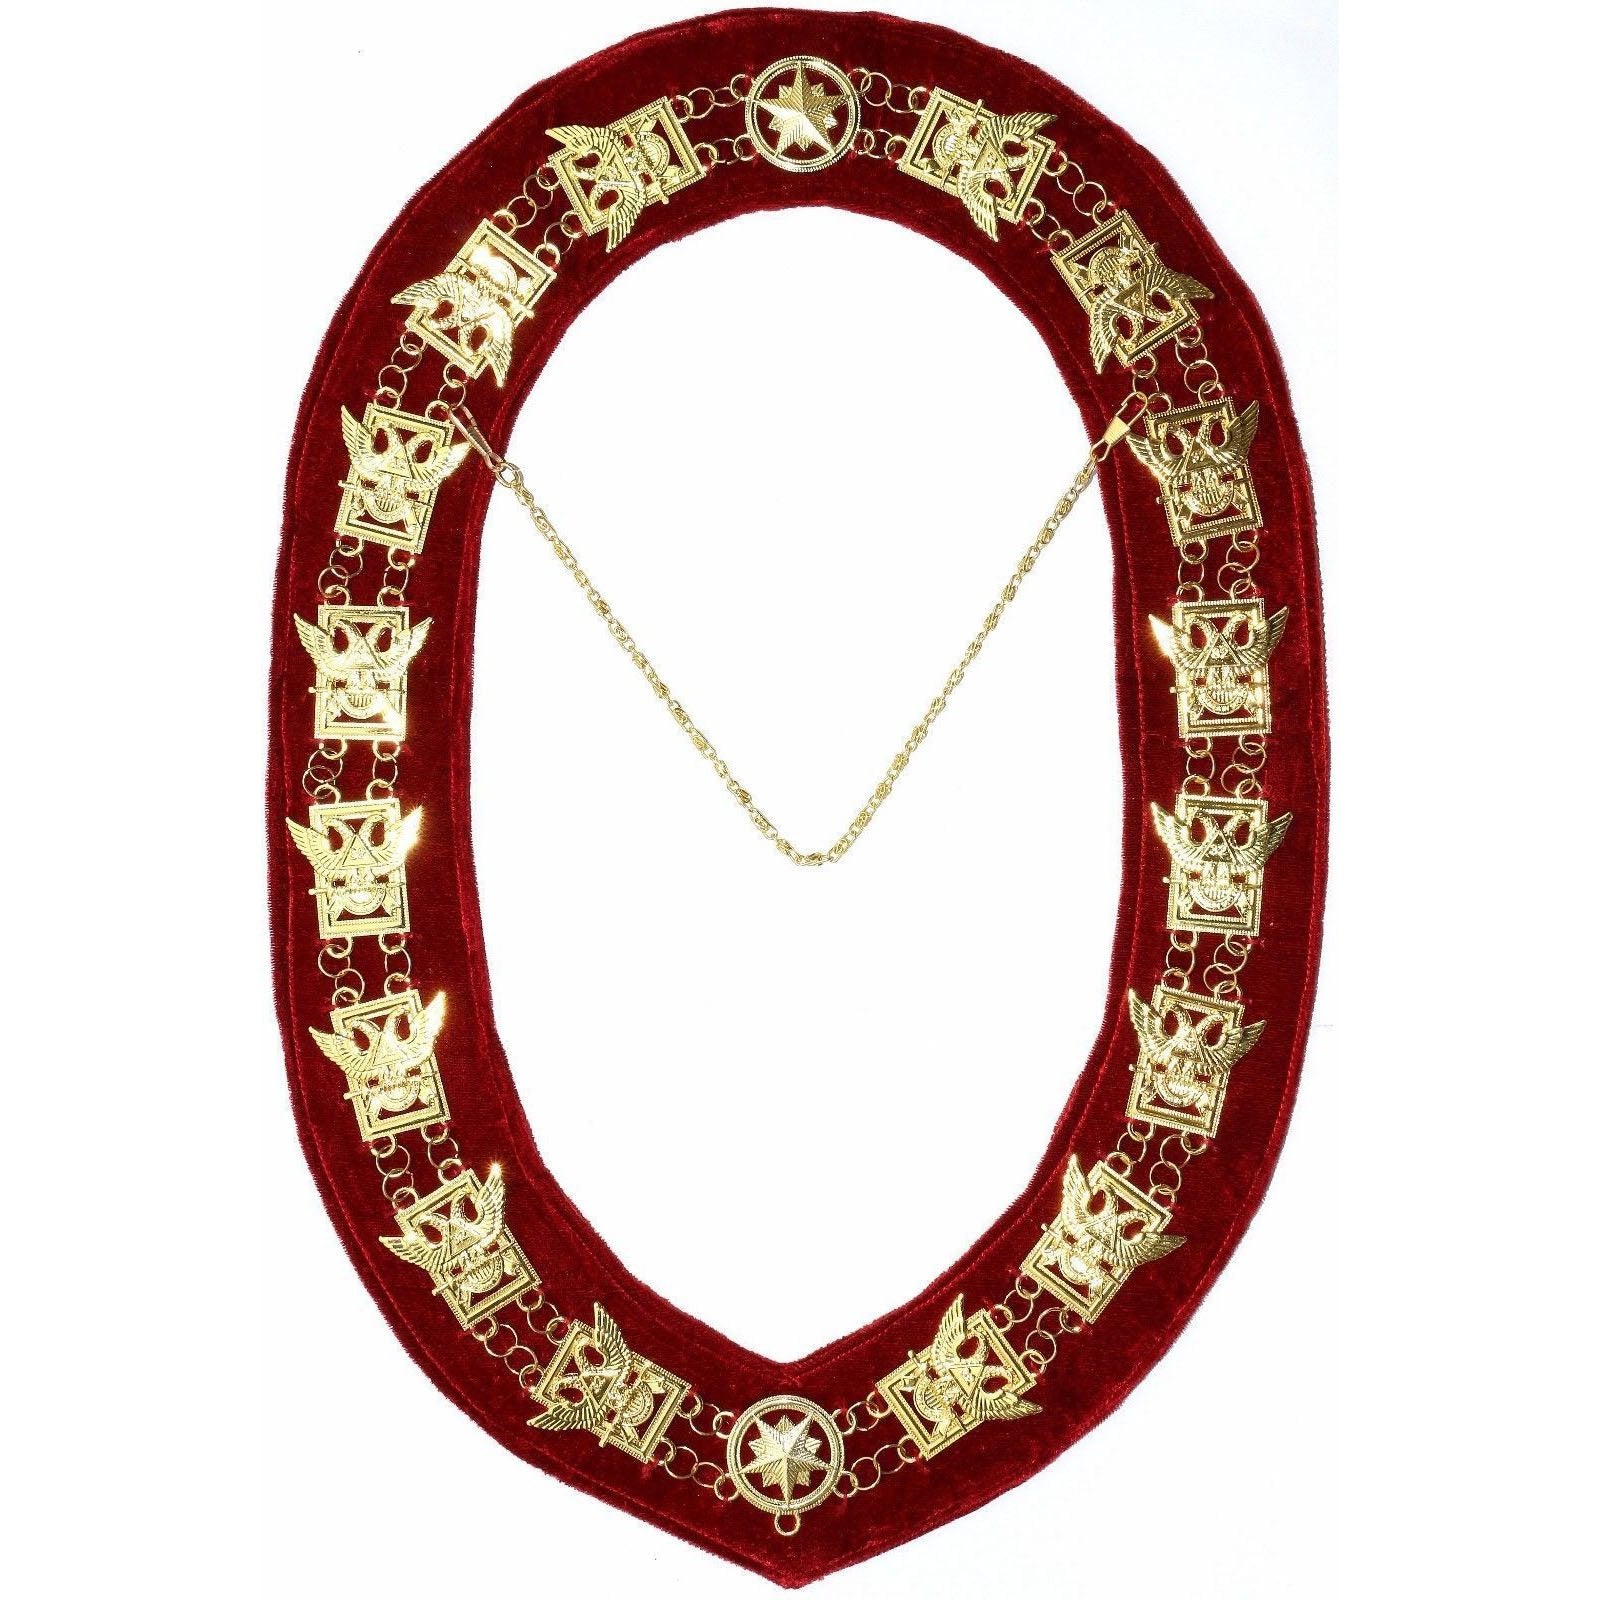 32nd Degree Scottish Rite Chain Collar - Wings Up Gold Plated - Bricks Masons